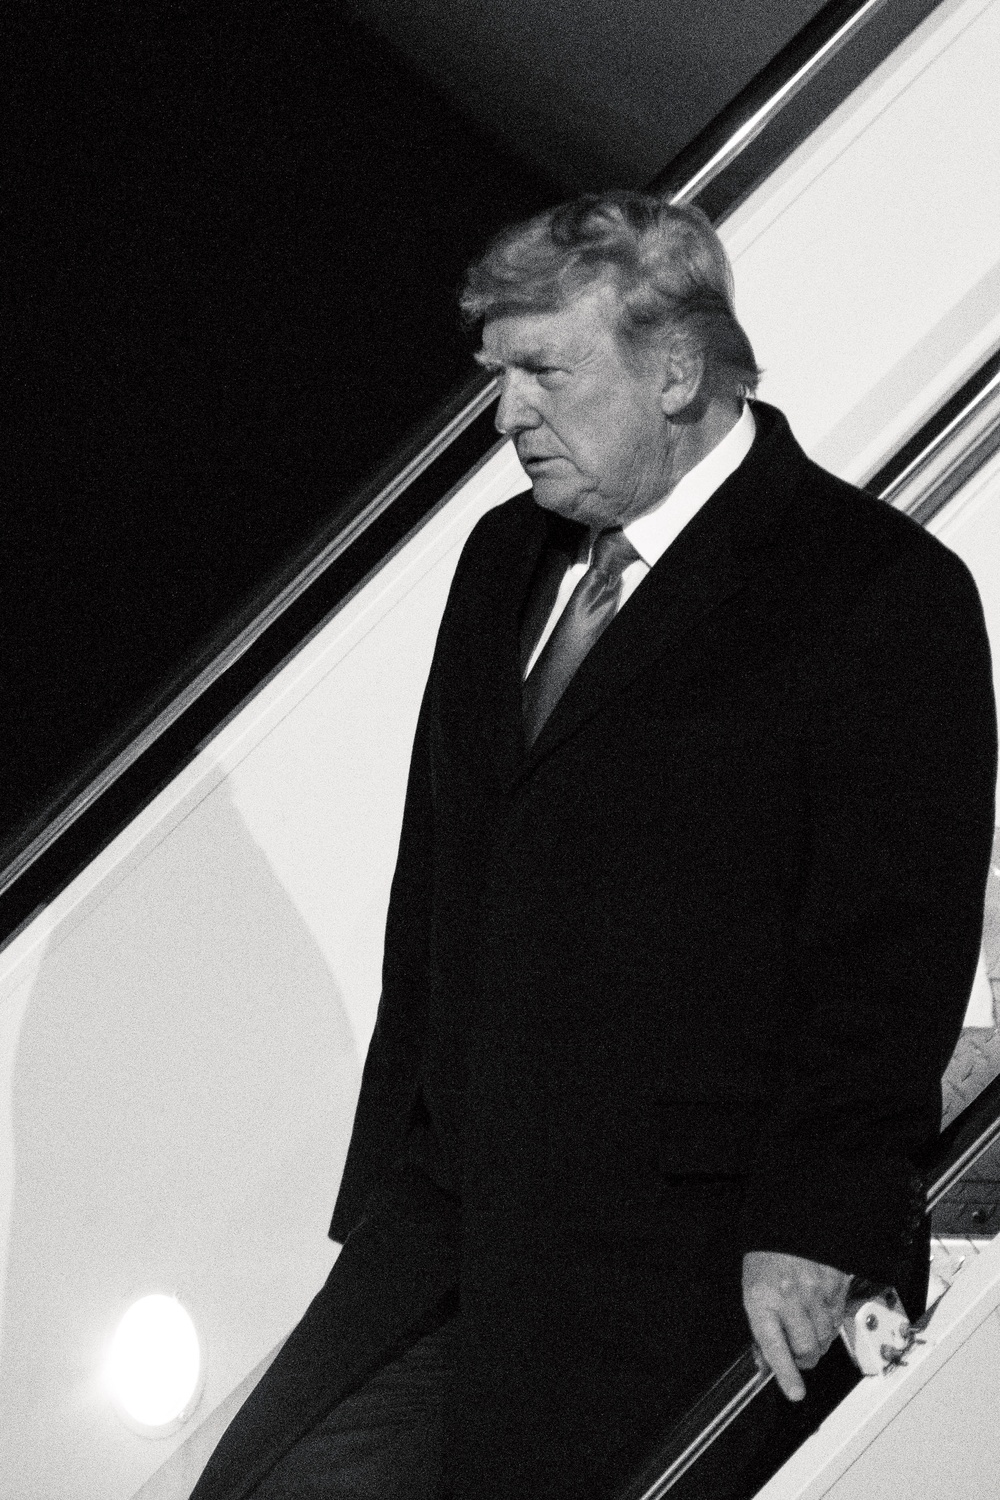 President Donald J. Trump arrives at Dobbins